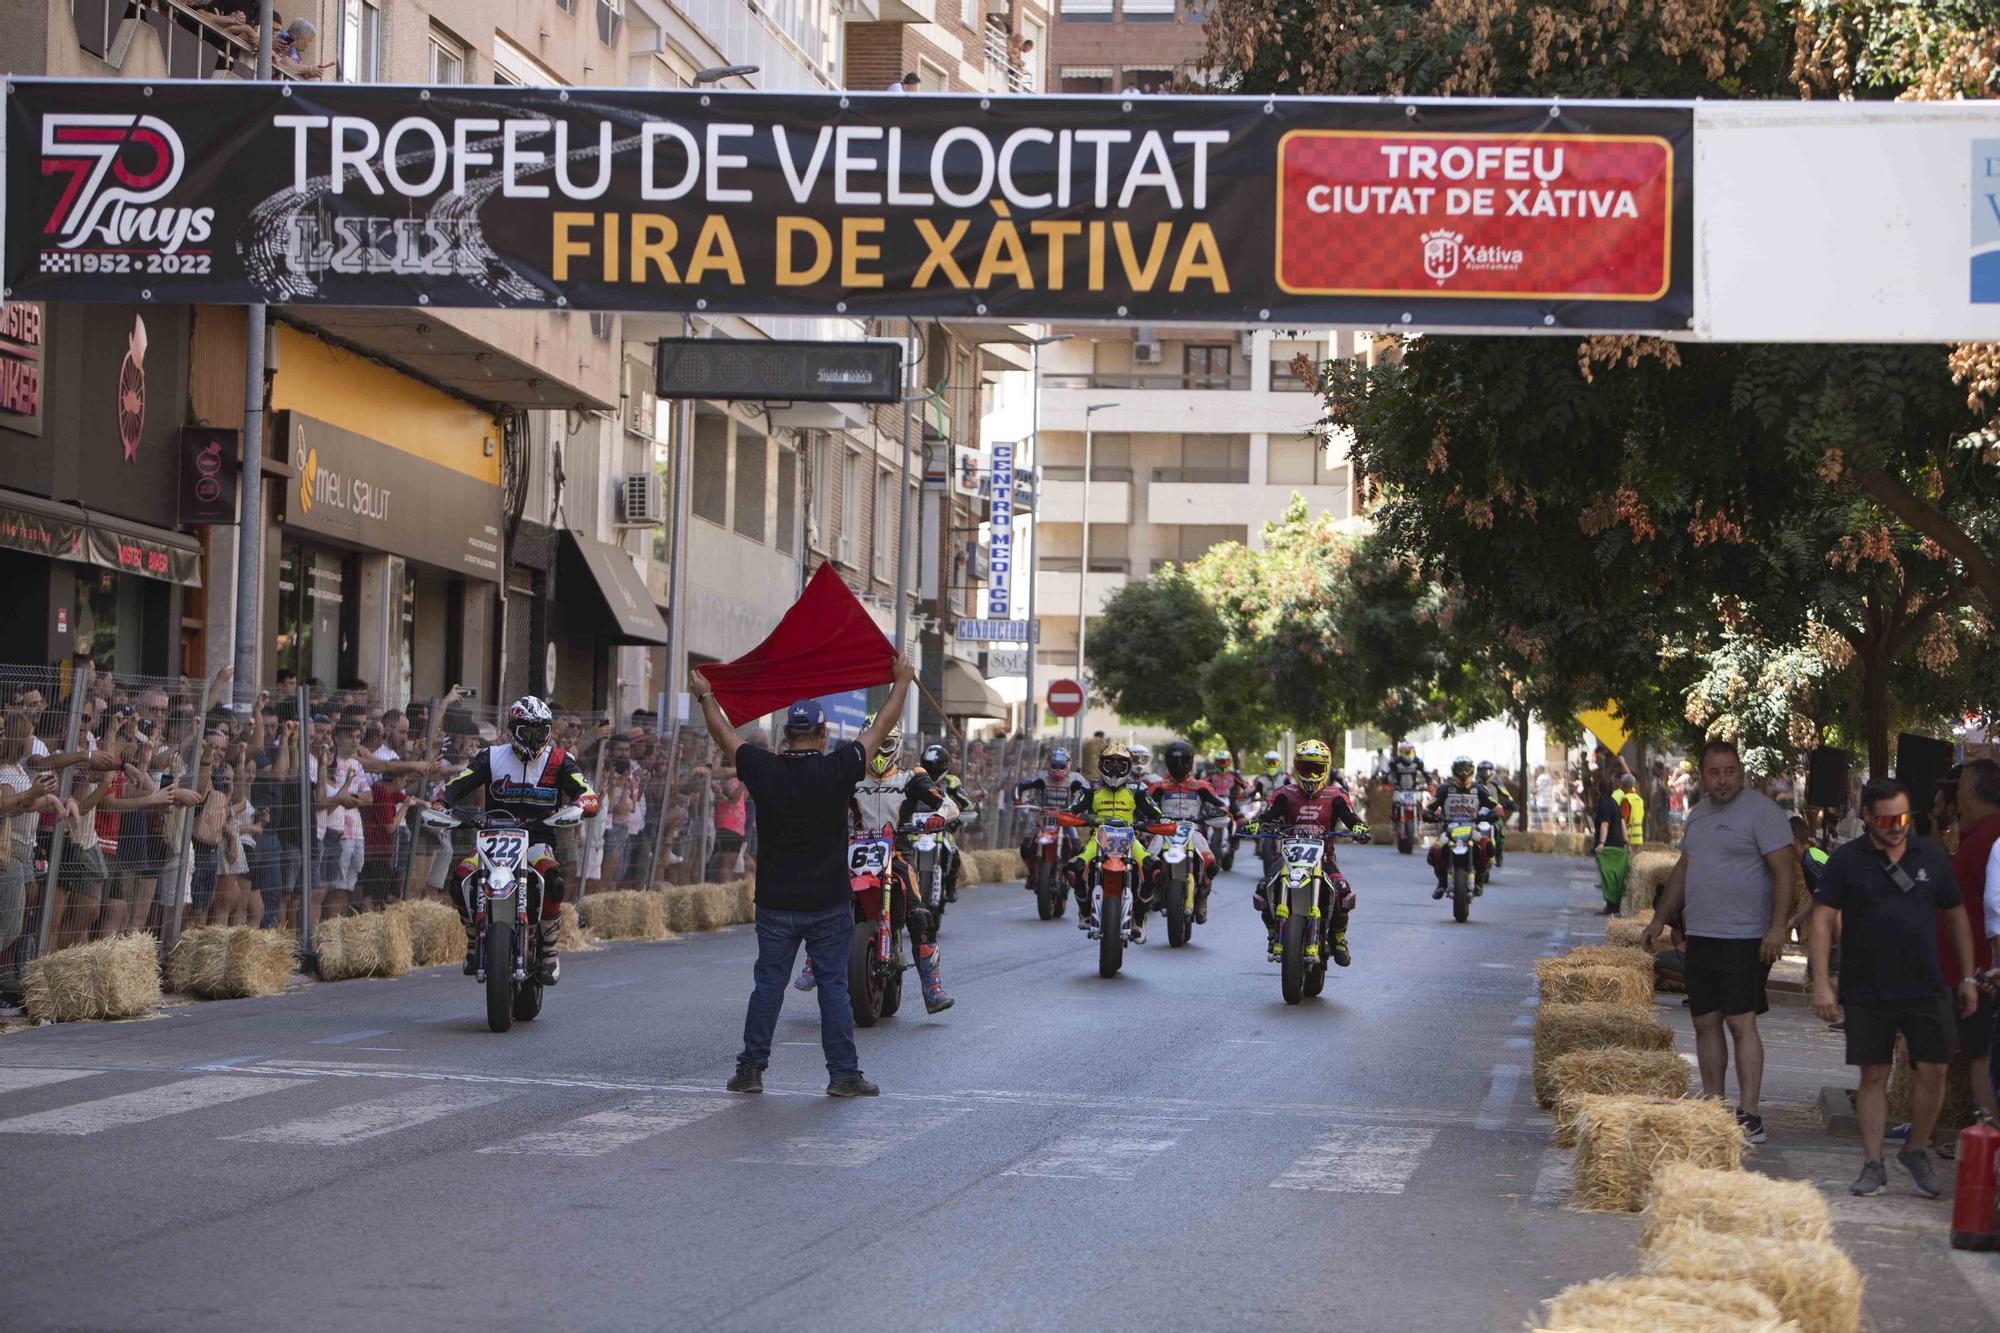 La carrera urbana de motos más antigua de España bate récords en Xàtiva